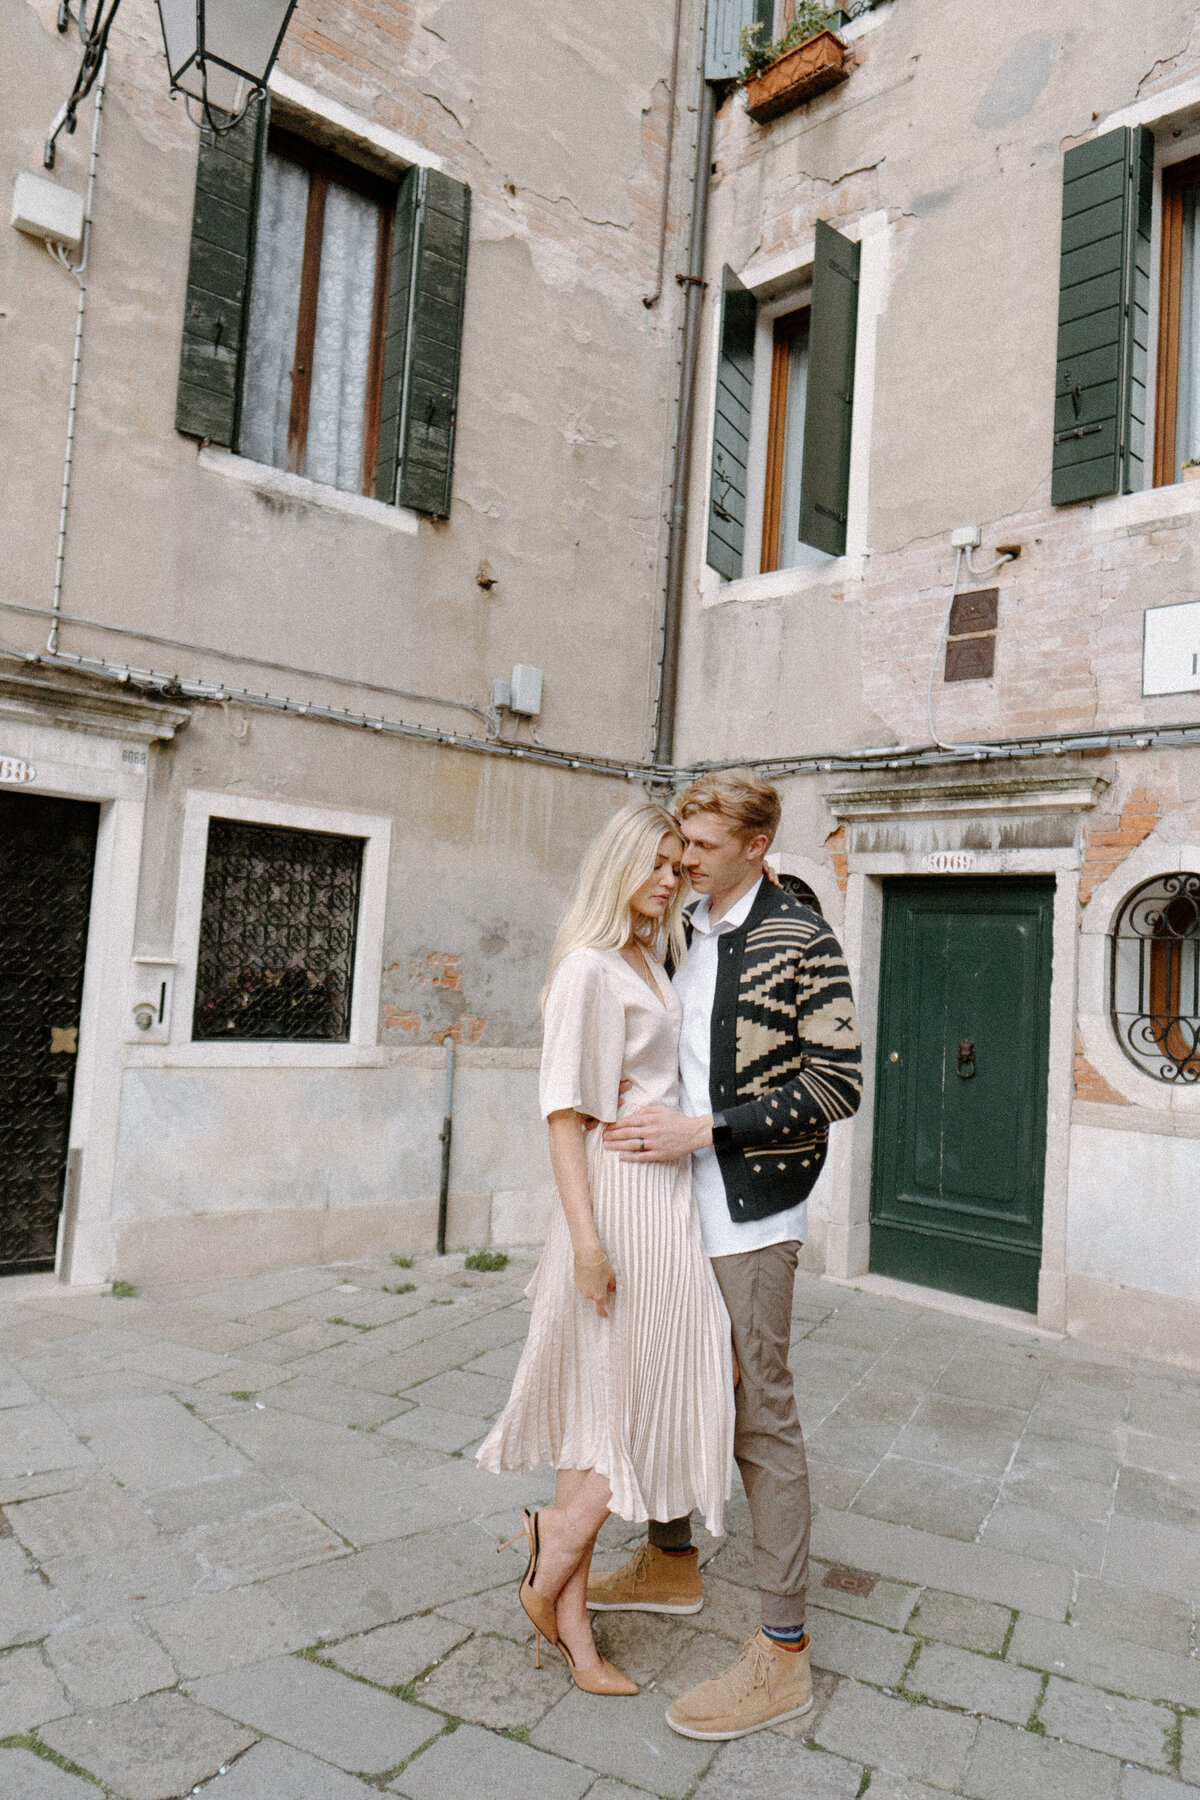 Documentary-Style-Editorial-Vogue-Italy-Destination-Wedding-Leah-Gunn-Photography-12